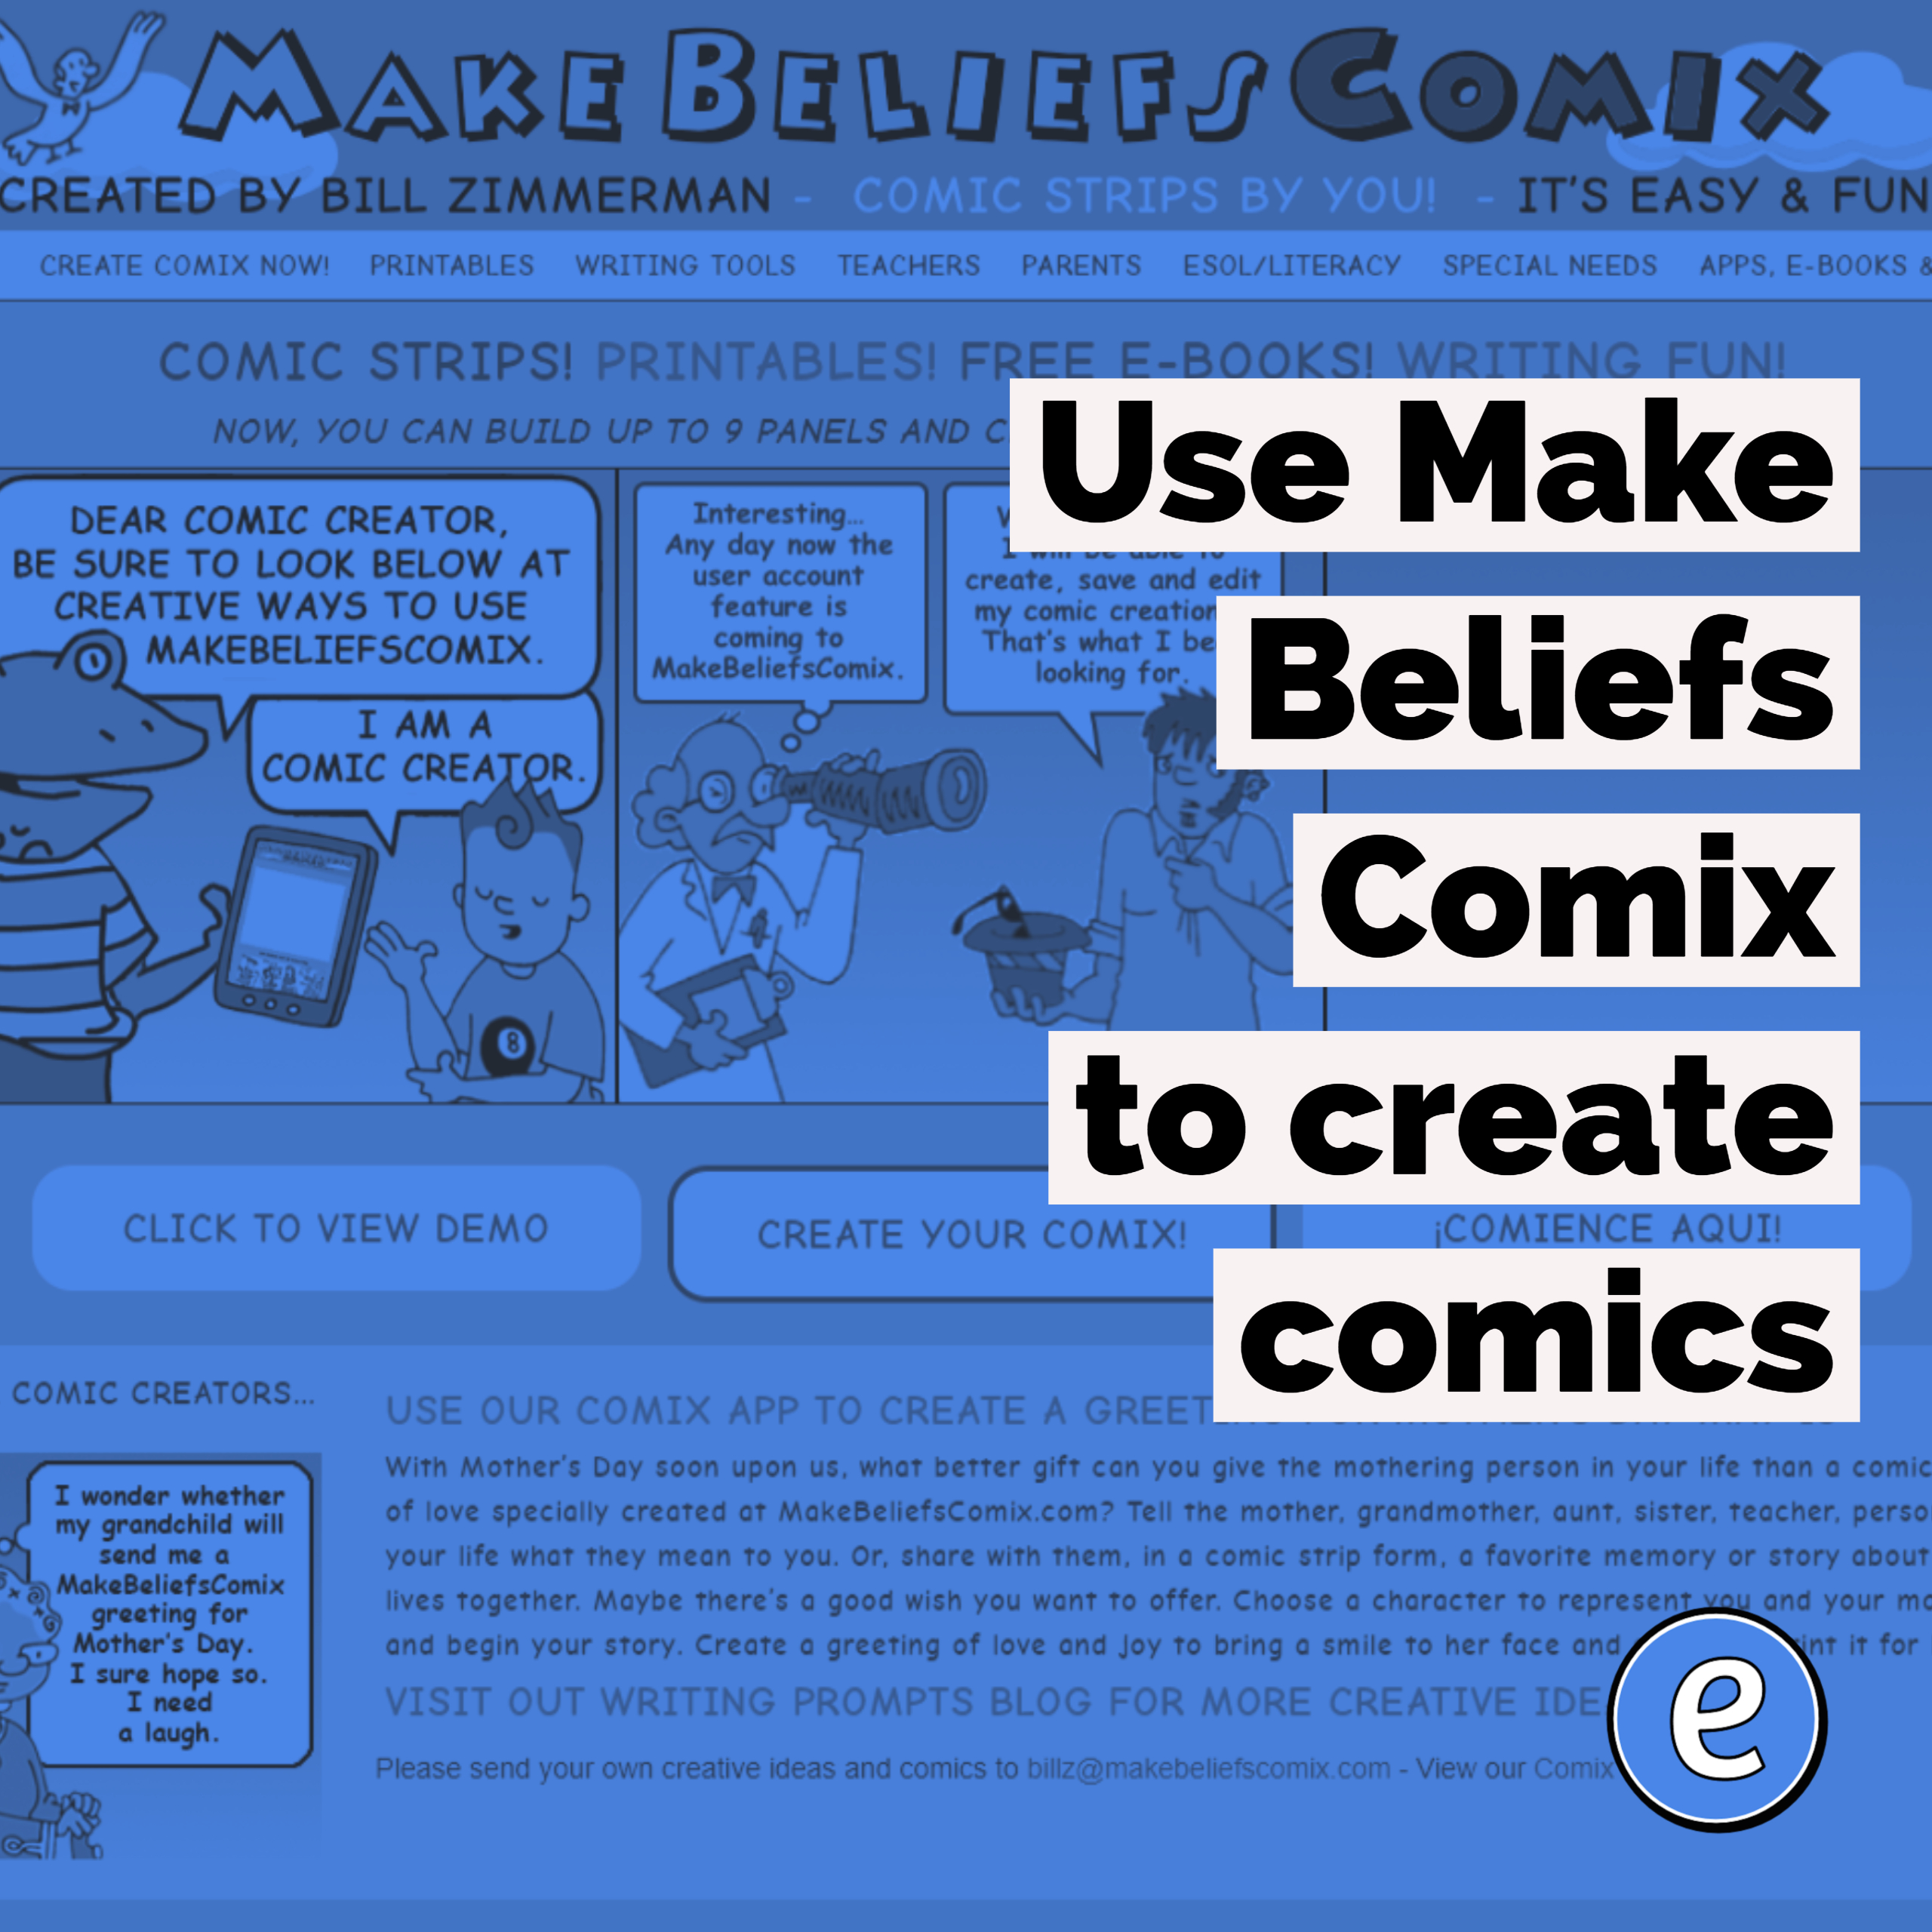 Use Make Beliefs Comix to create comics